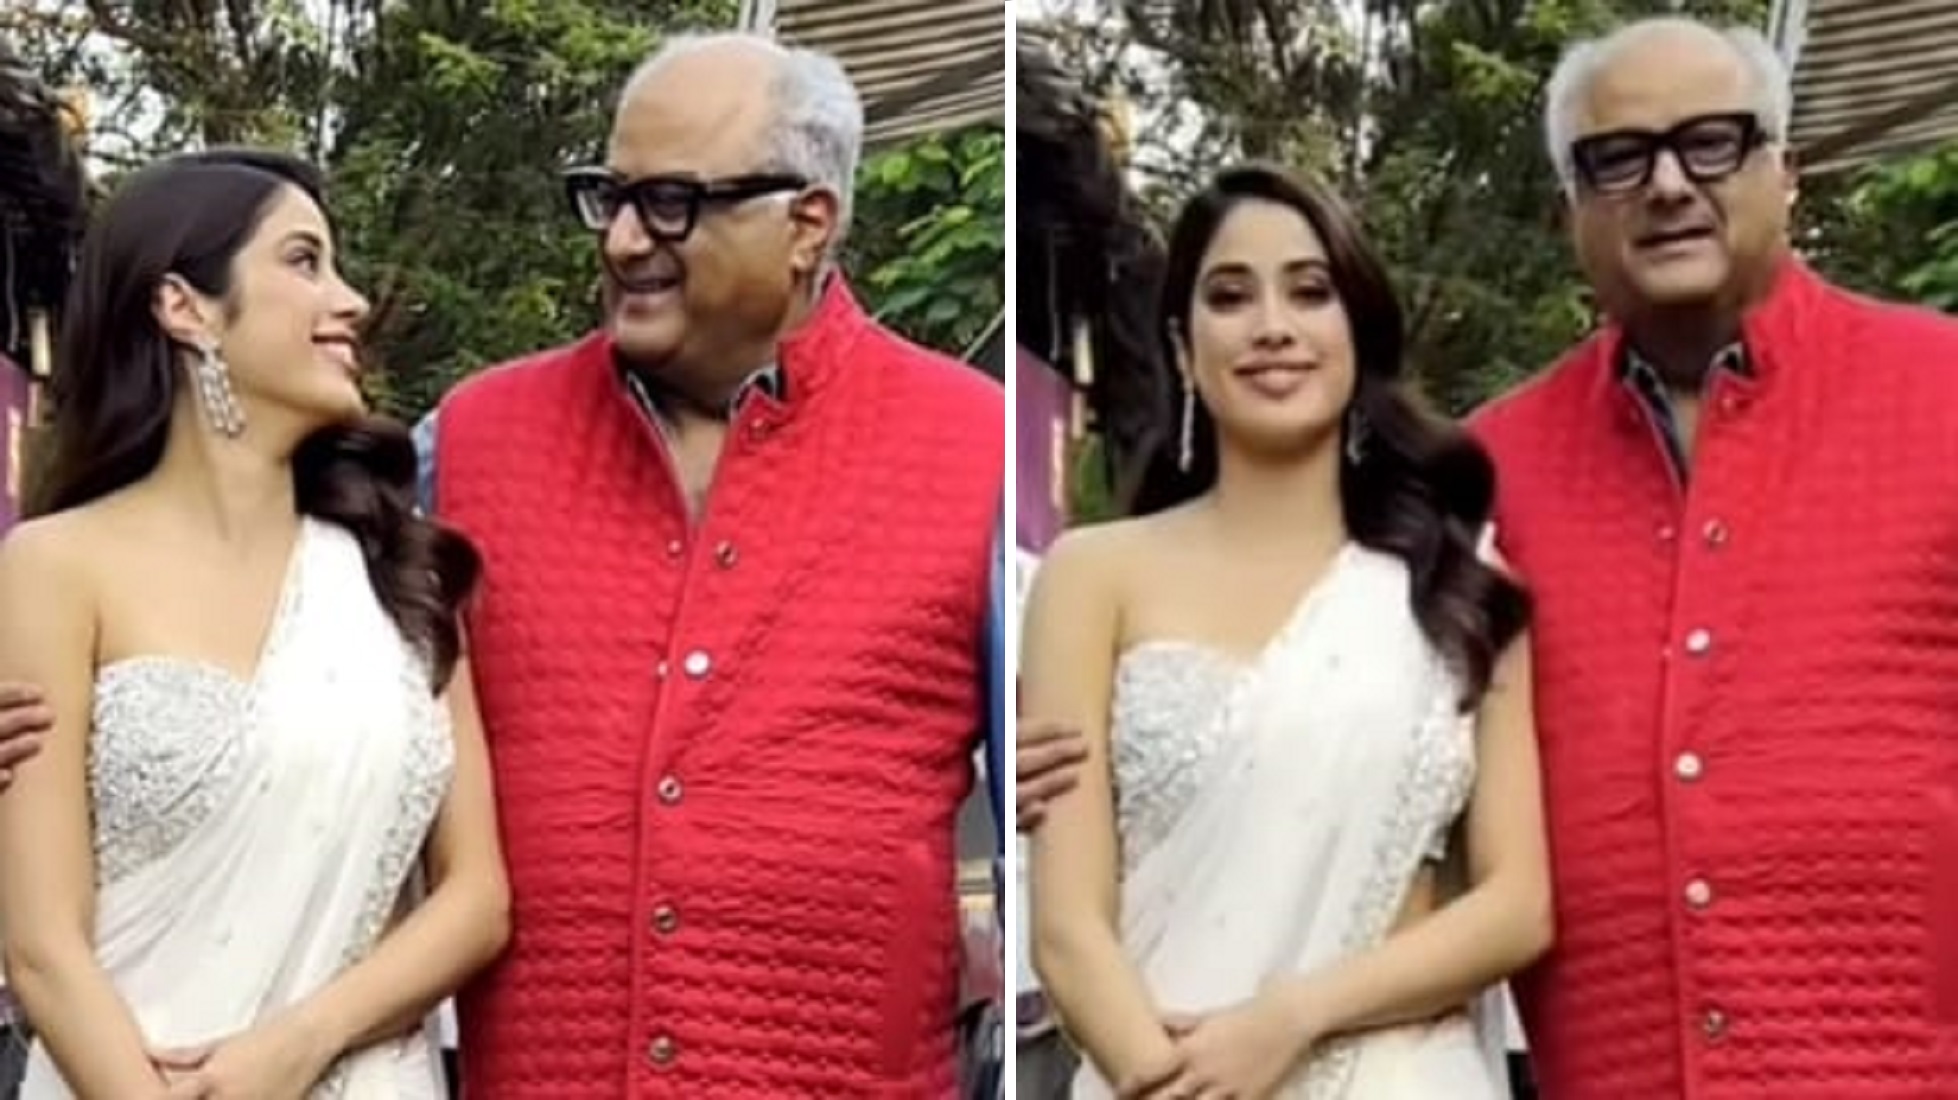 ‘Bhai-behen lag rahein hain na’:  Says Boney Kapoor As He Poses With Daughter Janhvi Kapoor